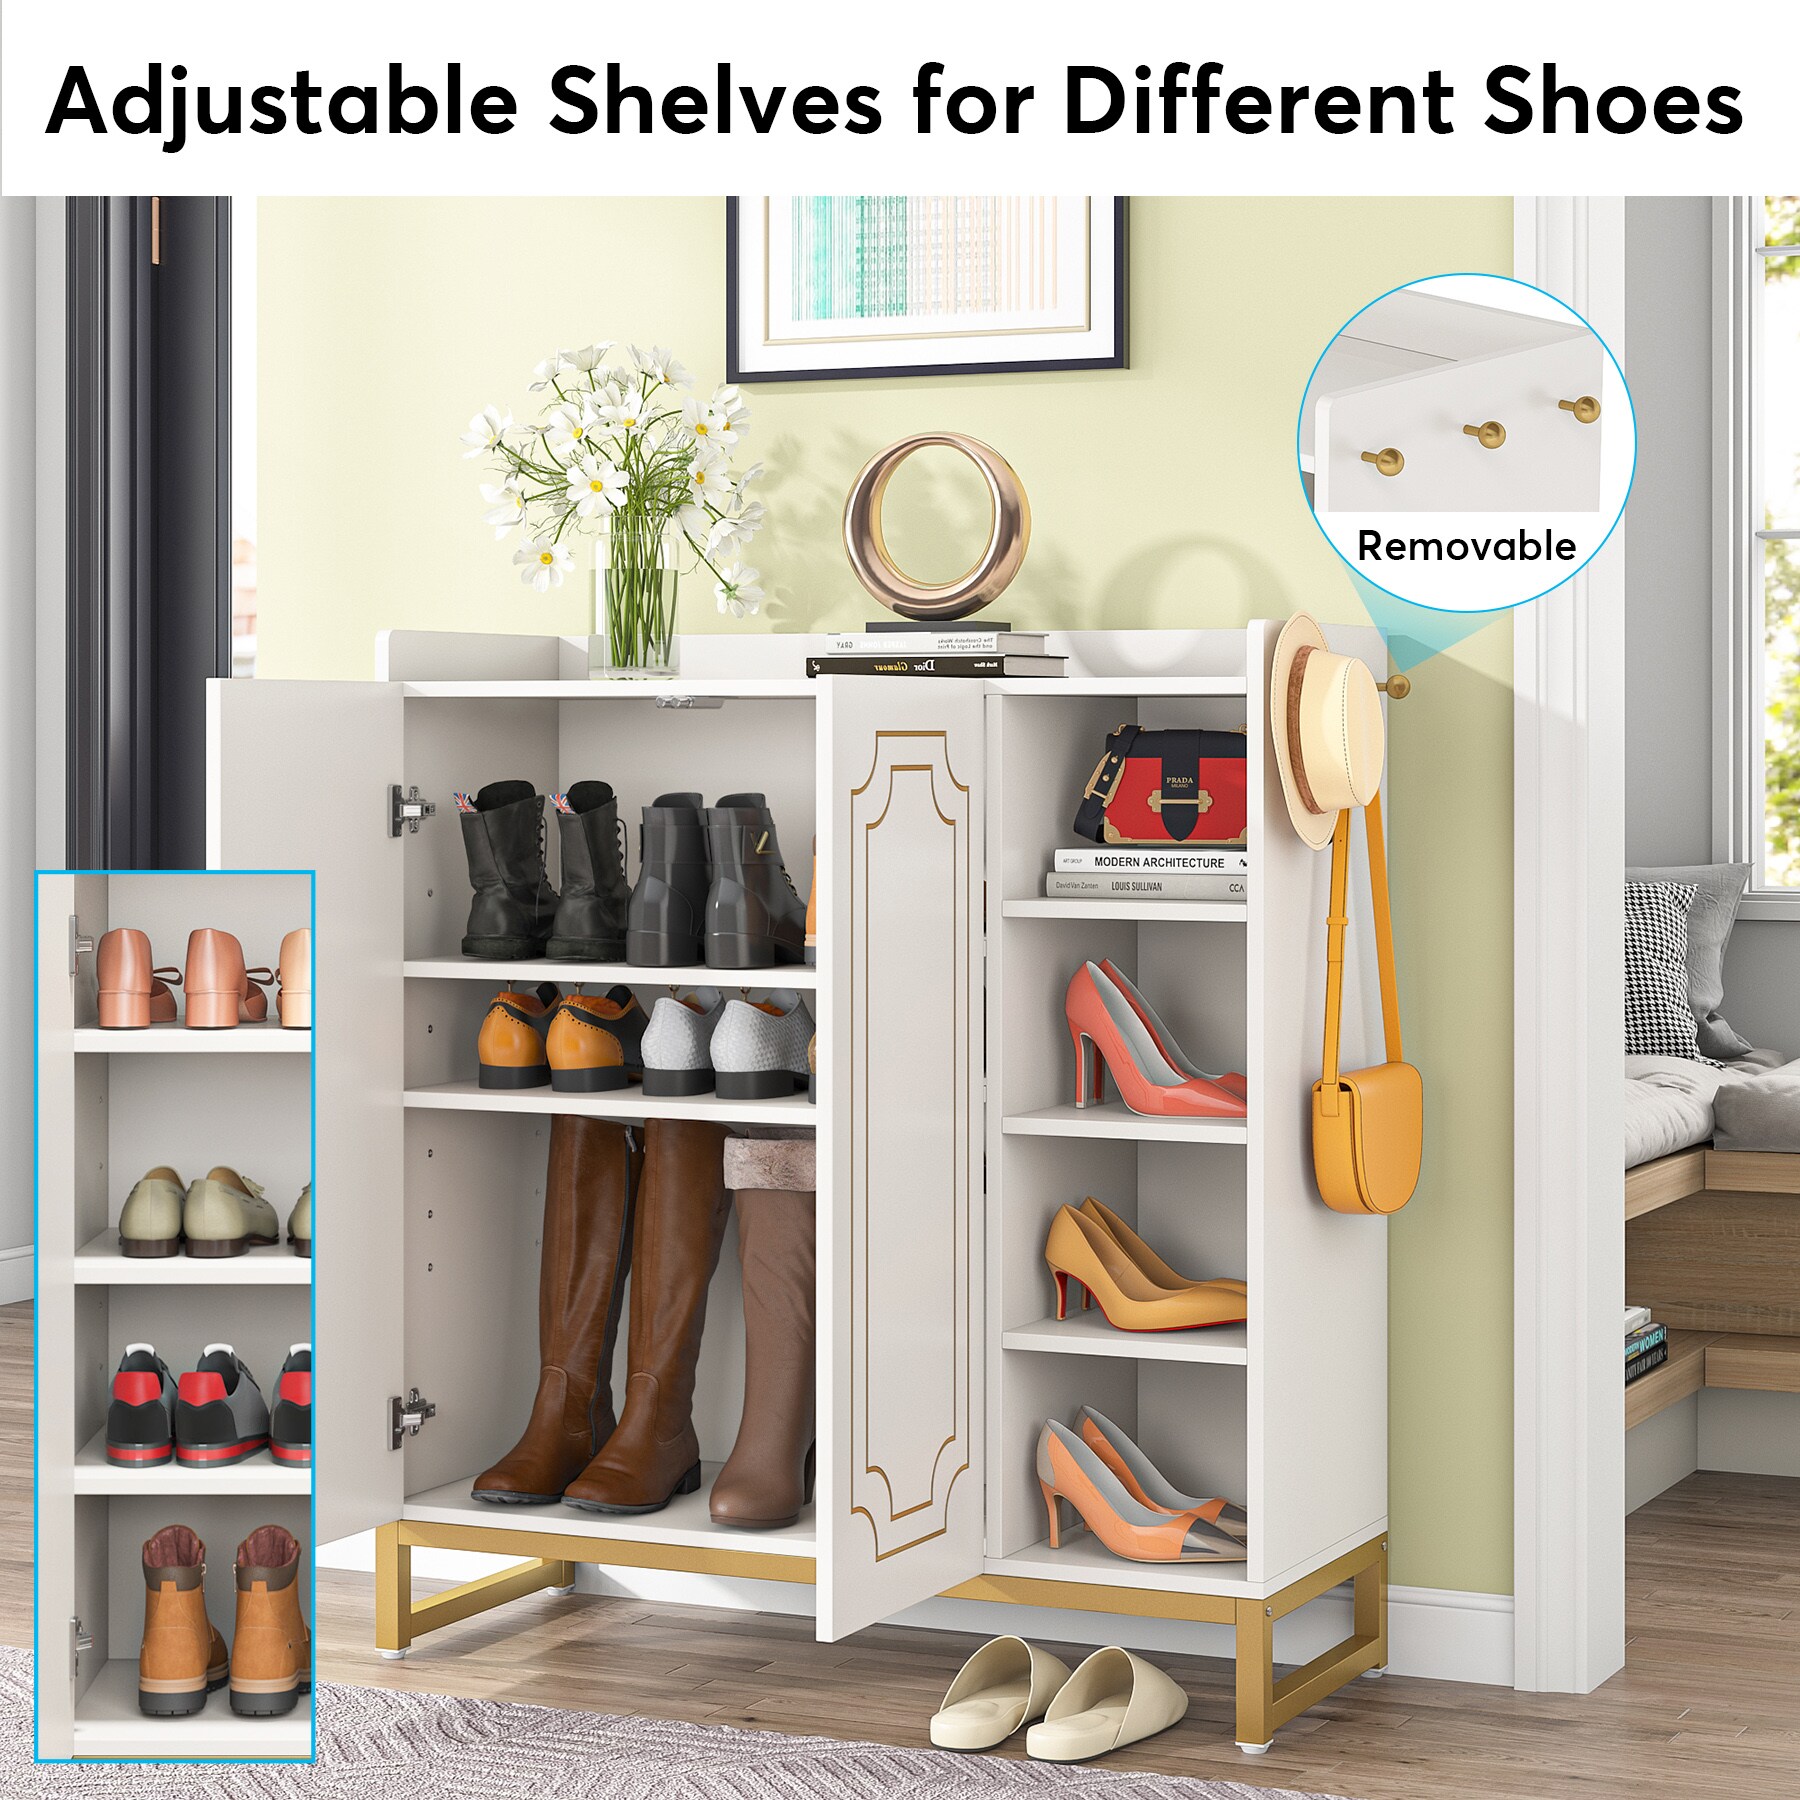 The picture - The shoe shelf of shoe shelves 